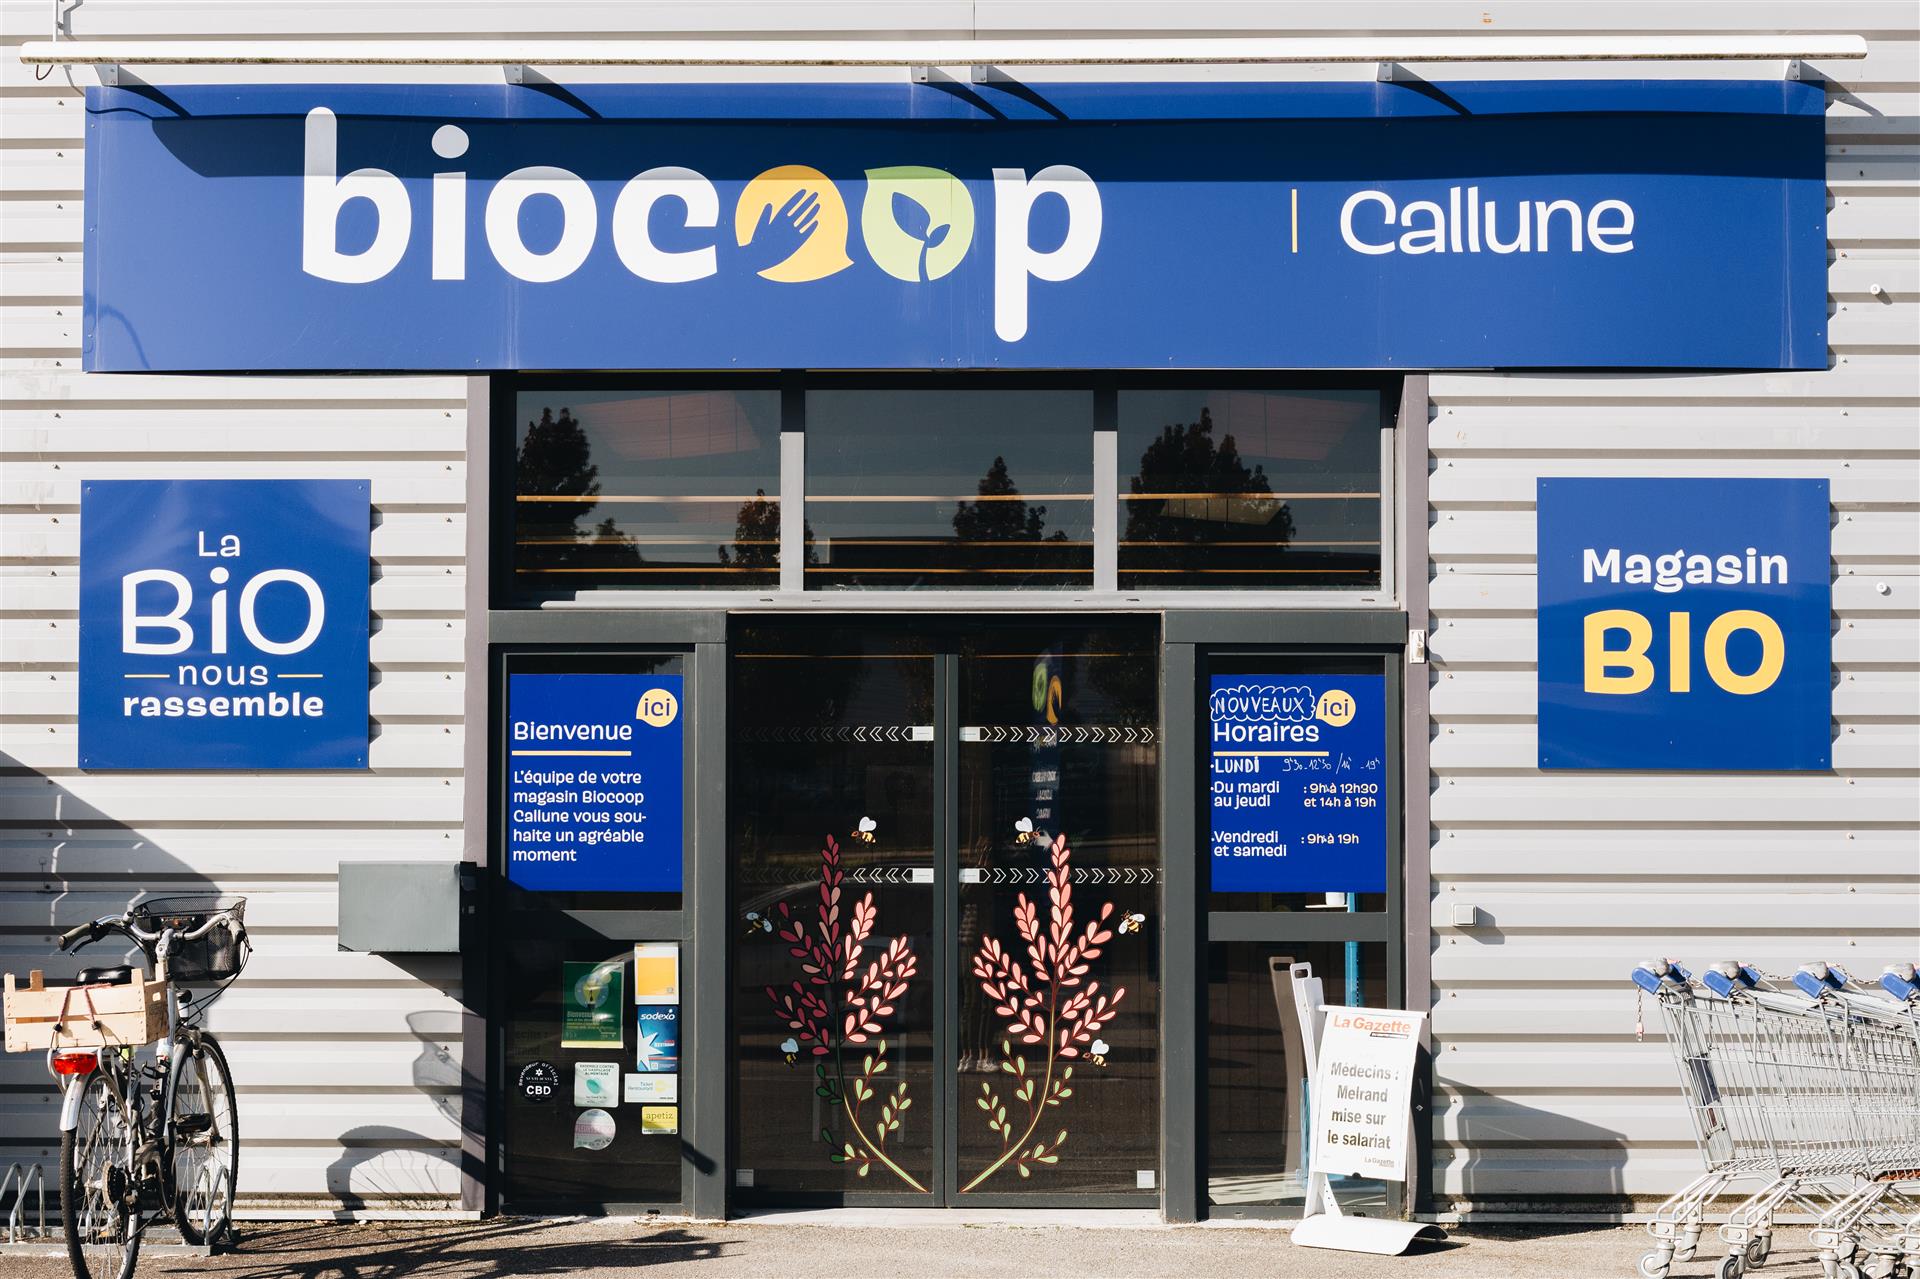 Biocoop Callune Baud